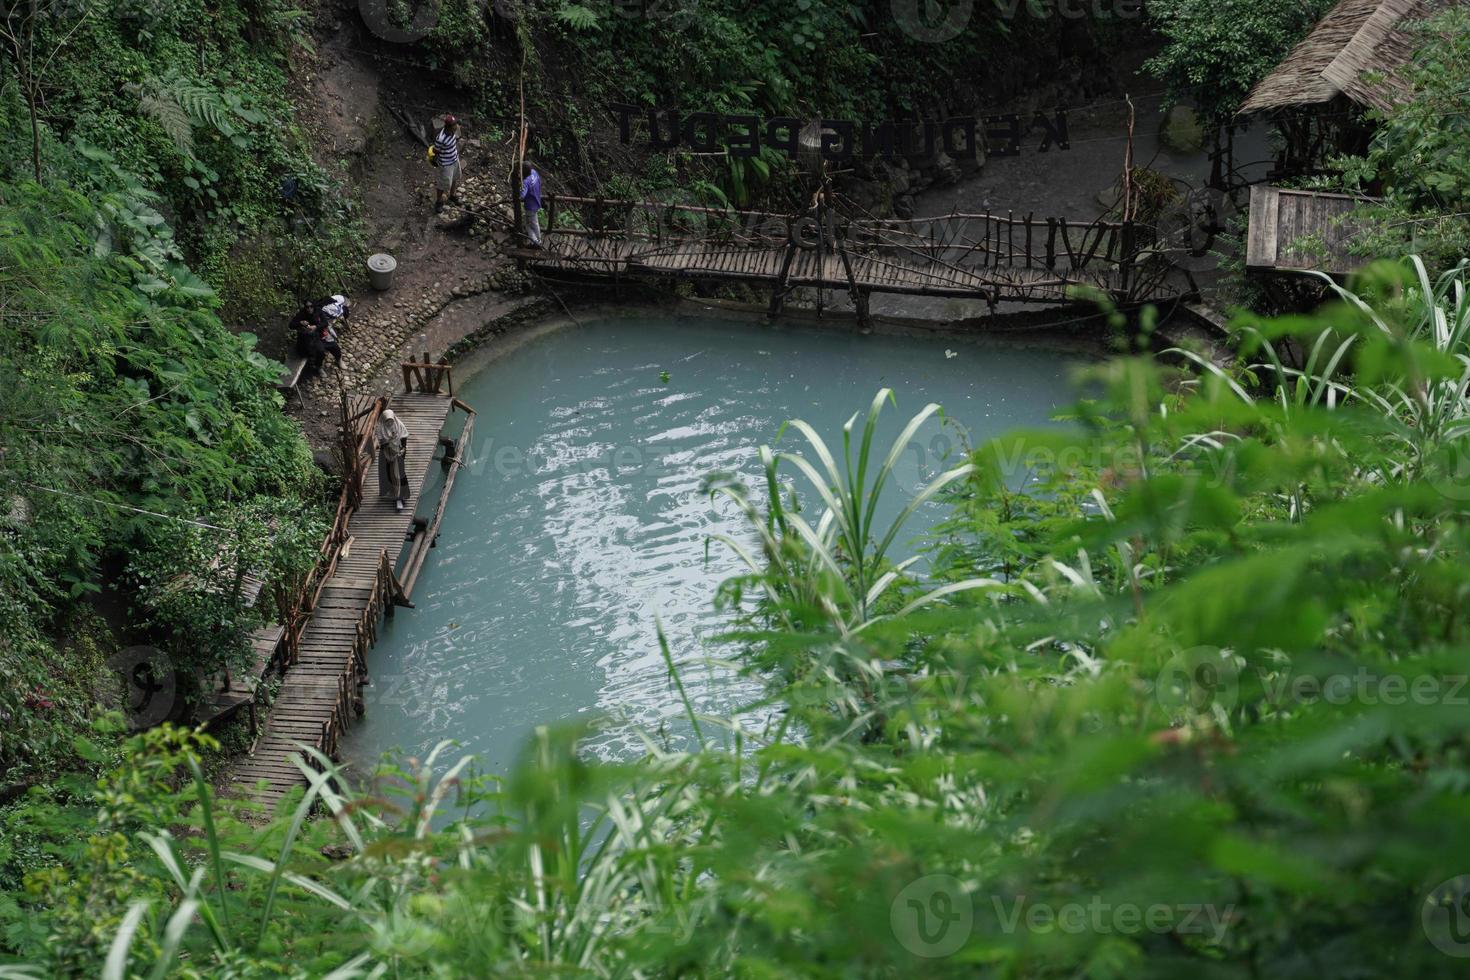 Kedung Pedut nature tourism, natural and fresh swimming pool tourism, with beautiful blue water photo